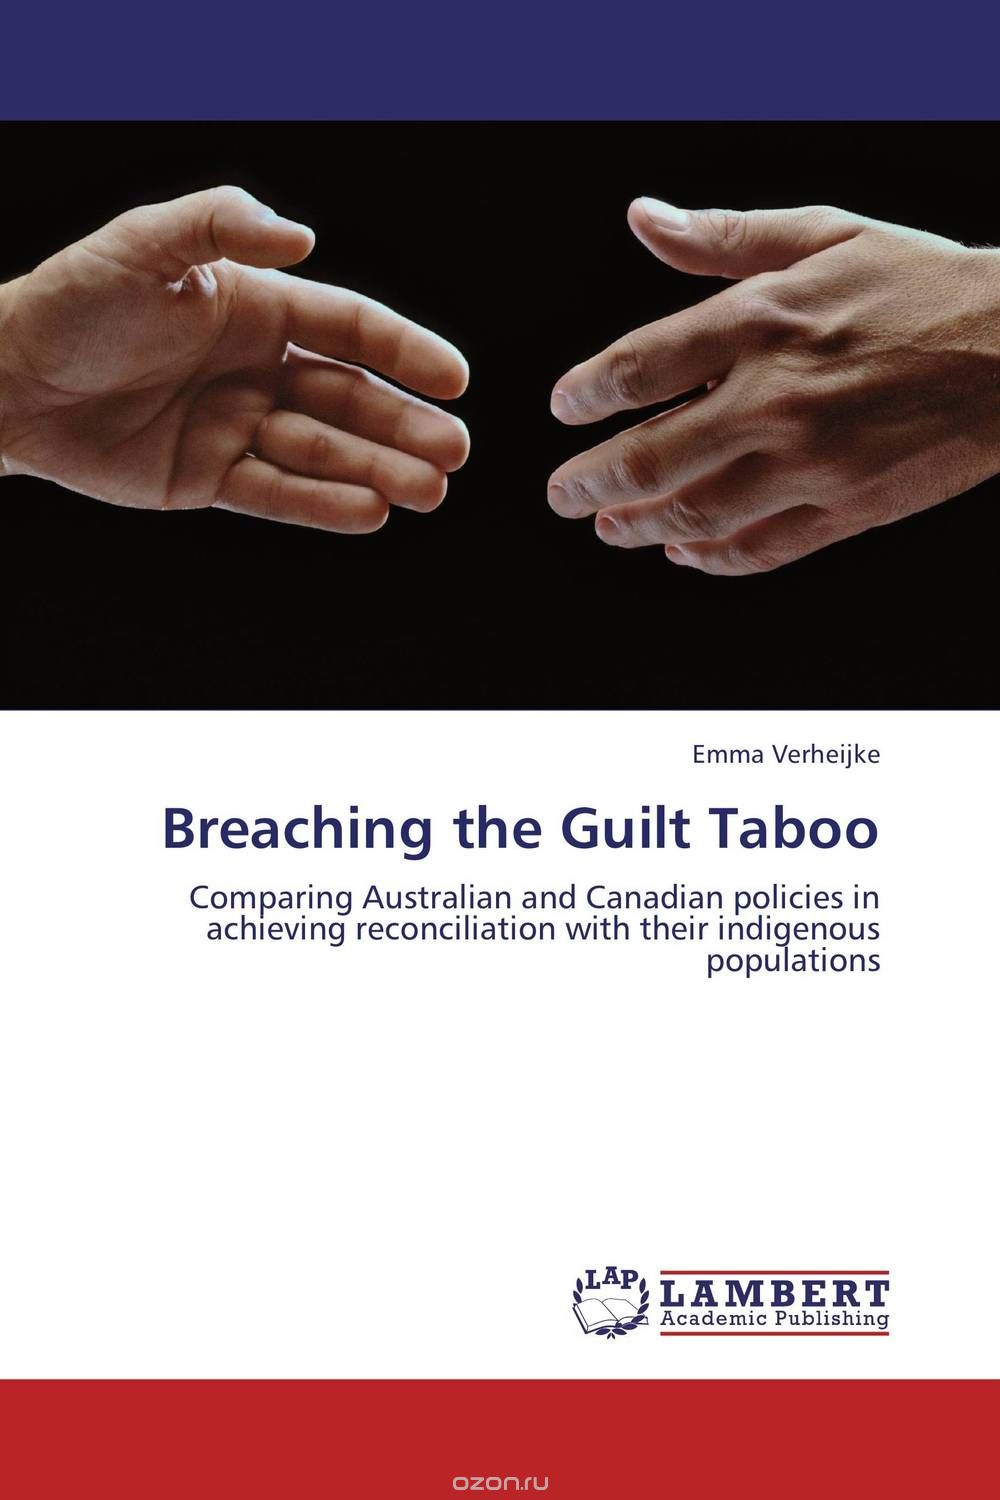 Скачать книгу "Breaching the Guilt Taboo"